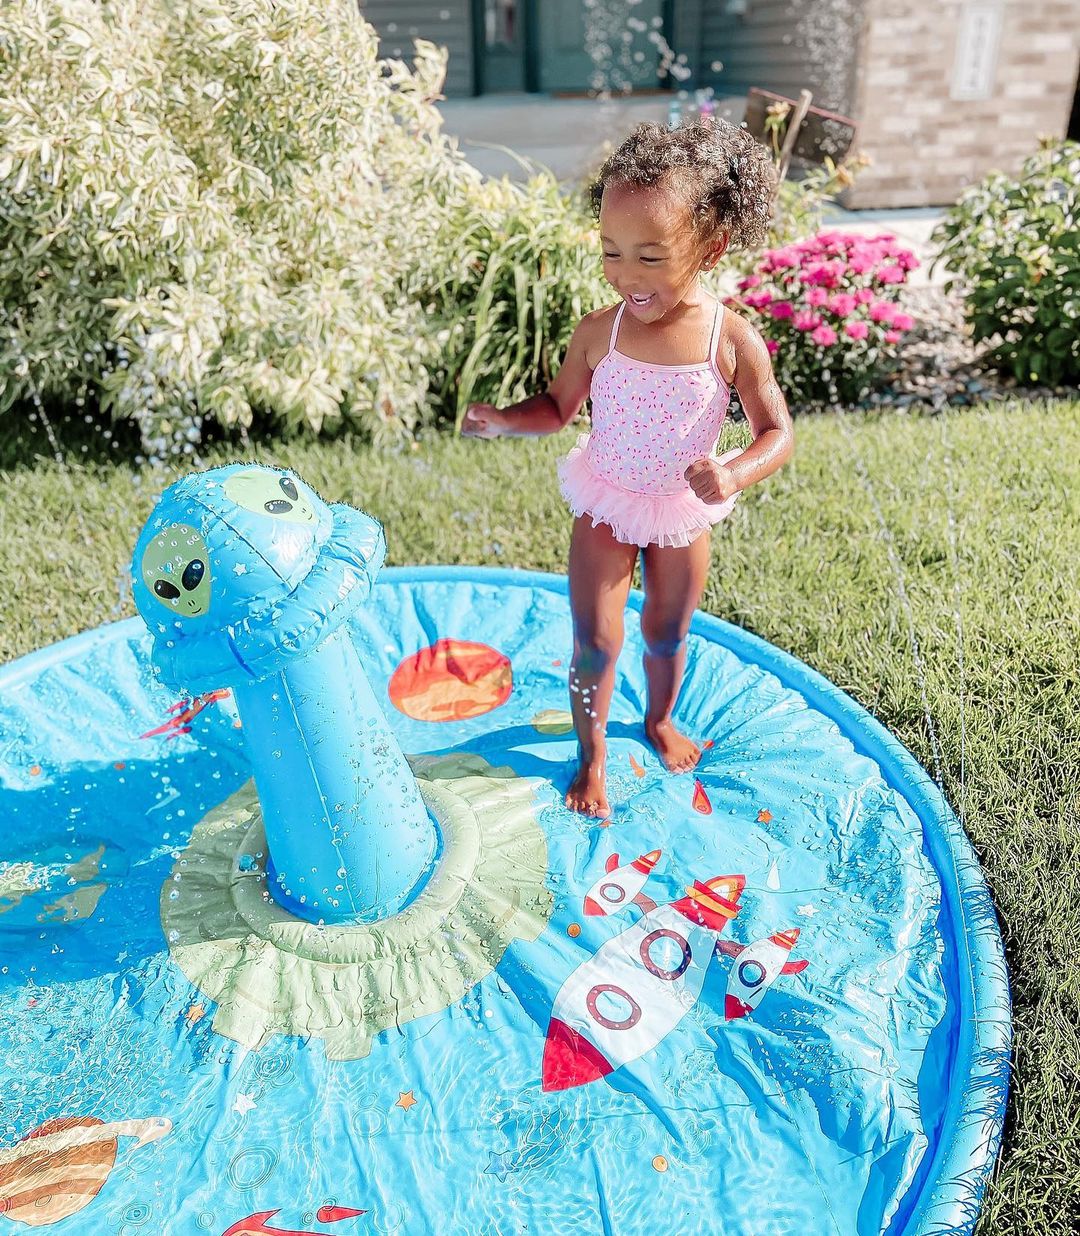 Child smiling using a backyard water splashpad. Photo by Instagram user @lienonme